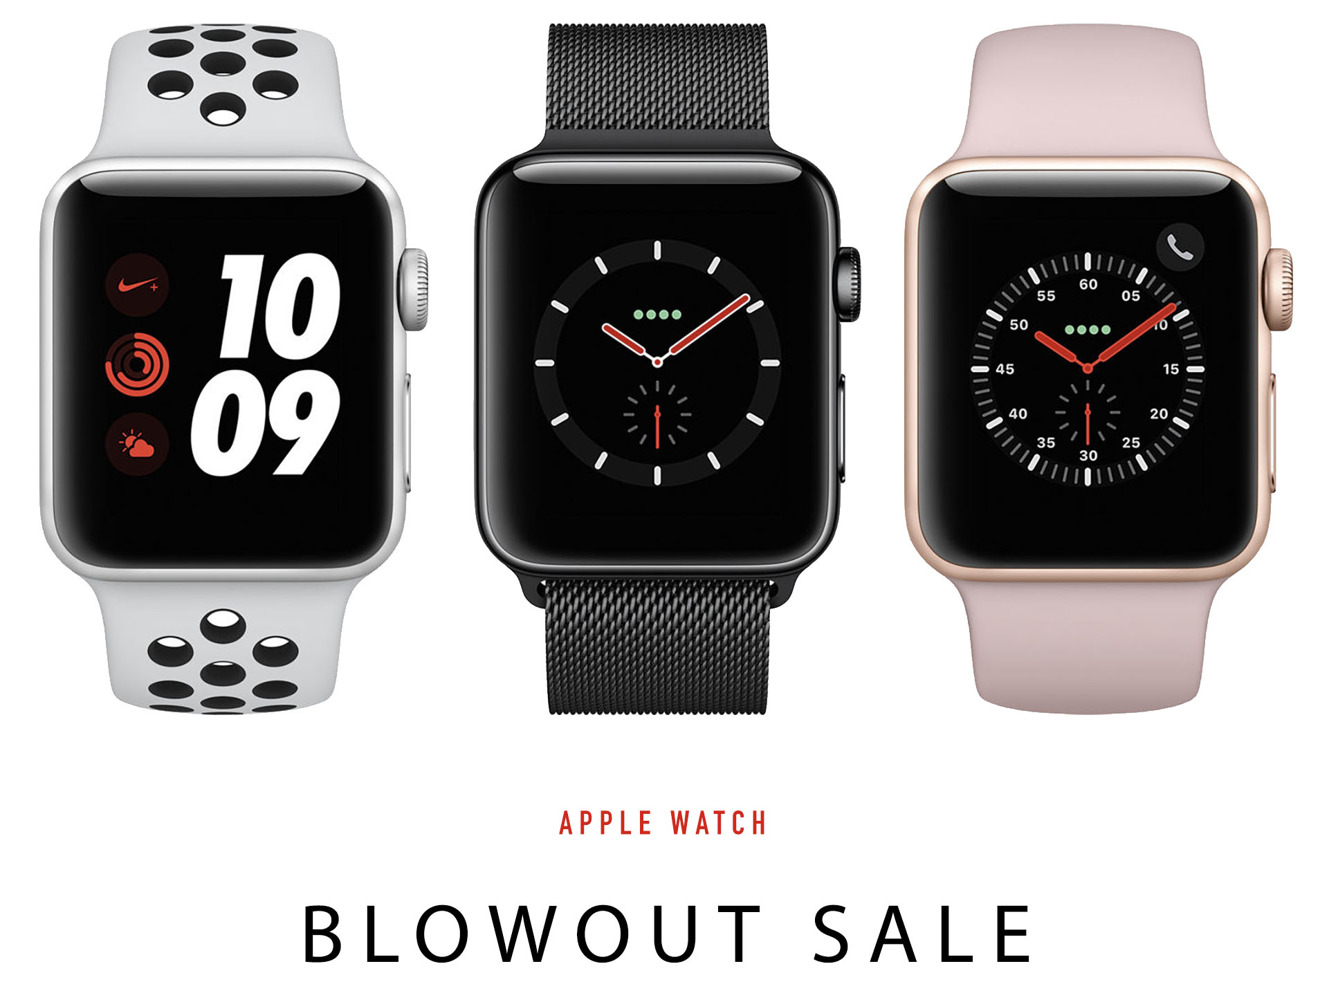 Apple Watch blowout deals